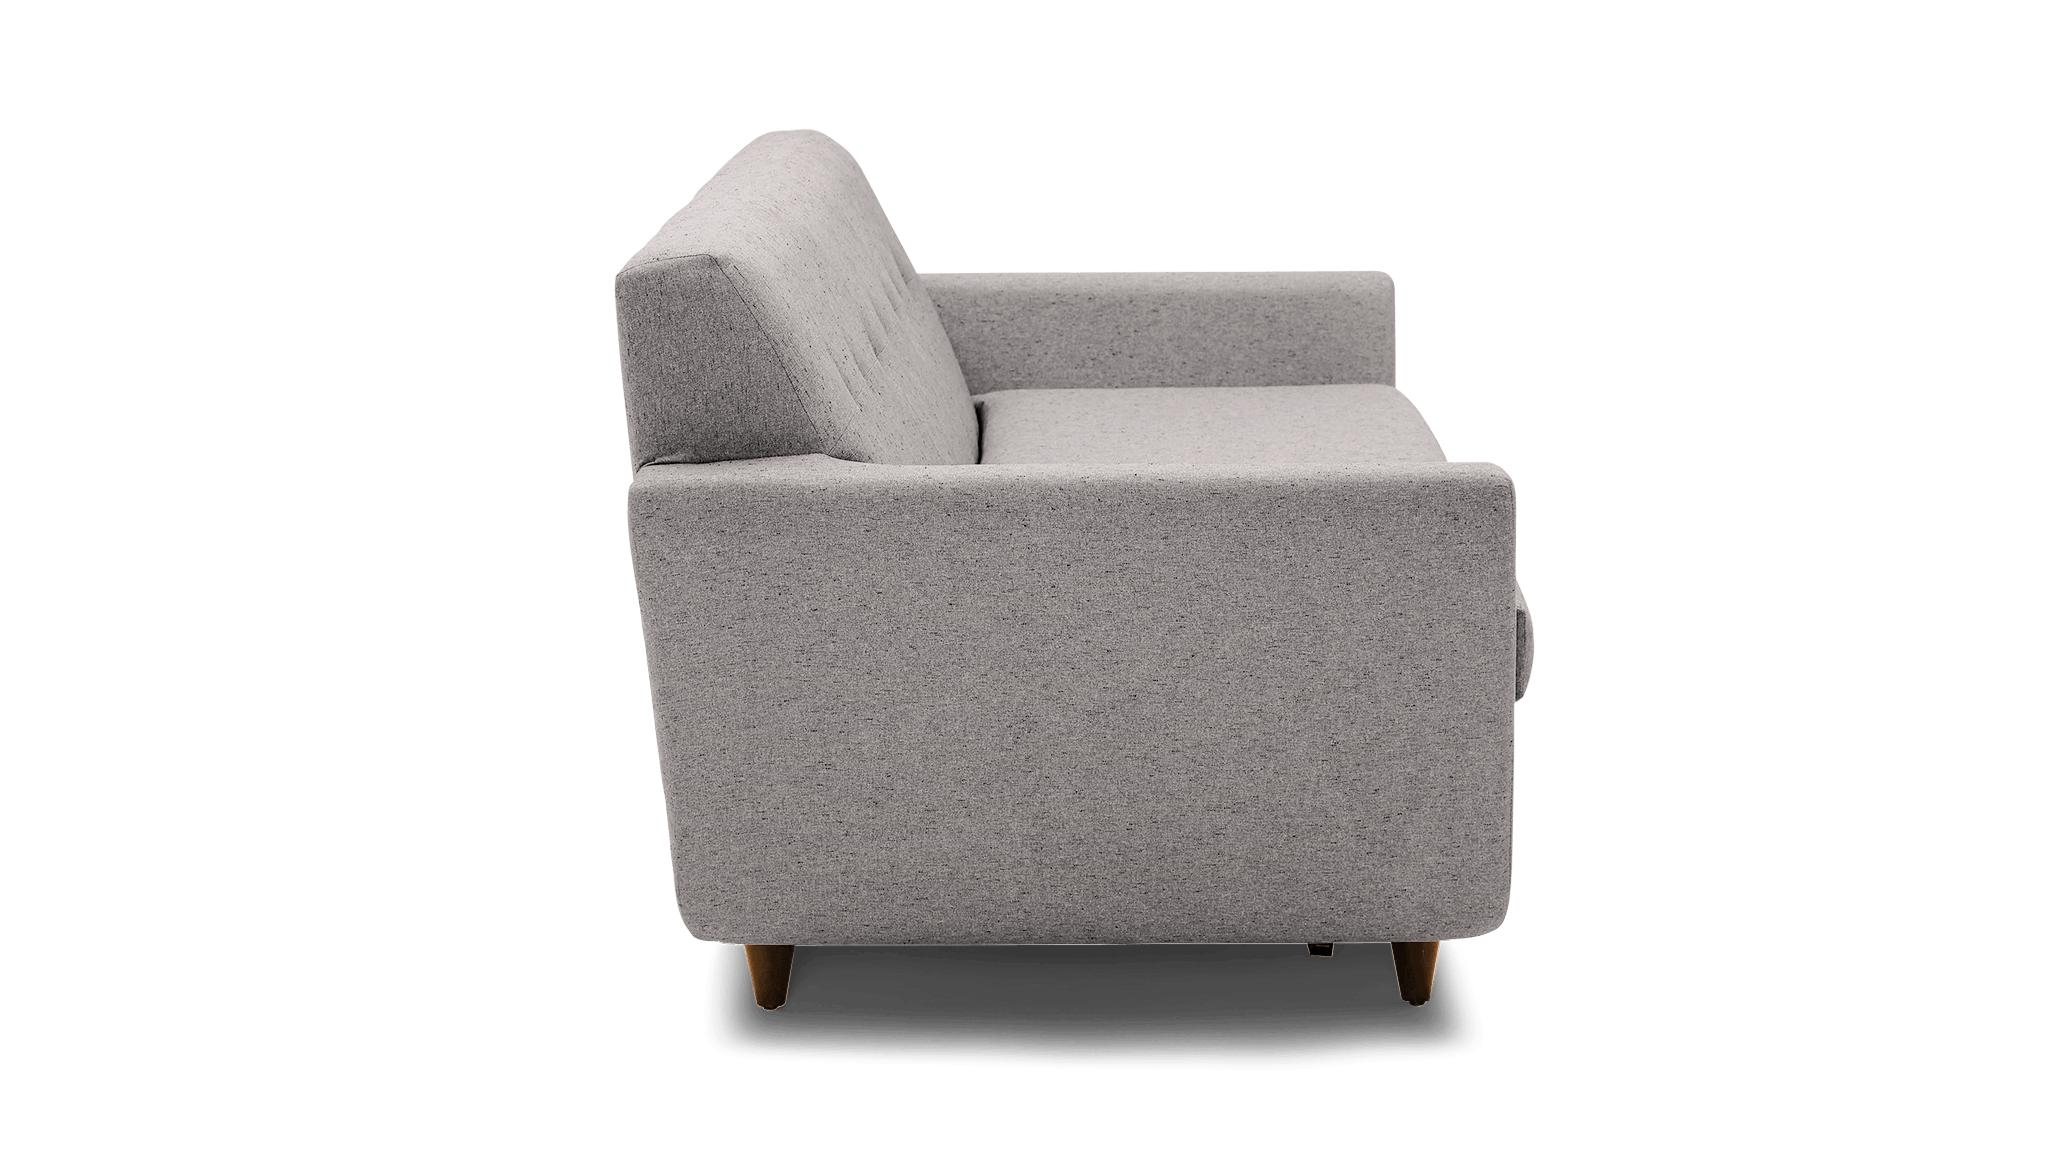 Gray Hughes Mid Century Modern Sleeper Sofa - Sunbrella Premier Wisteria - Mocha - Image 2